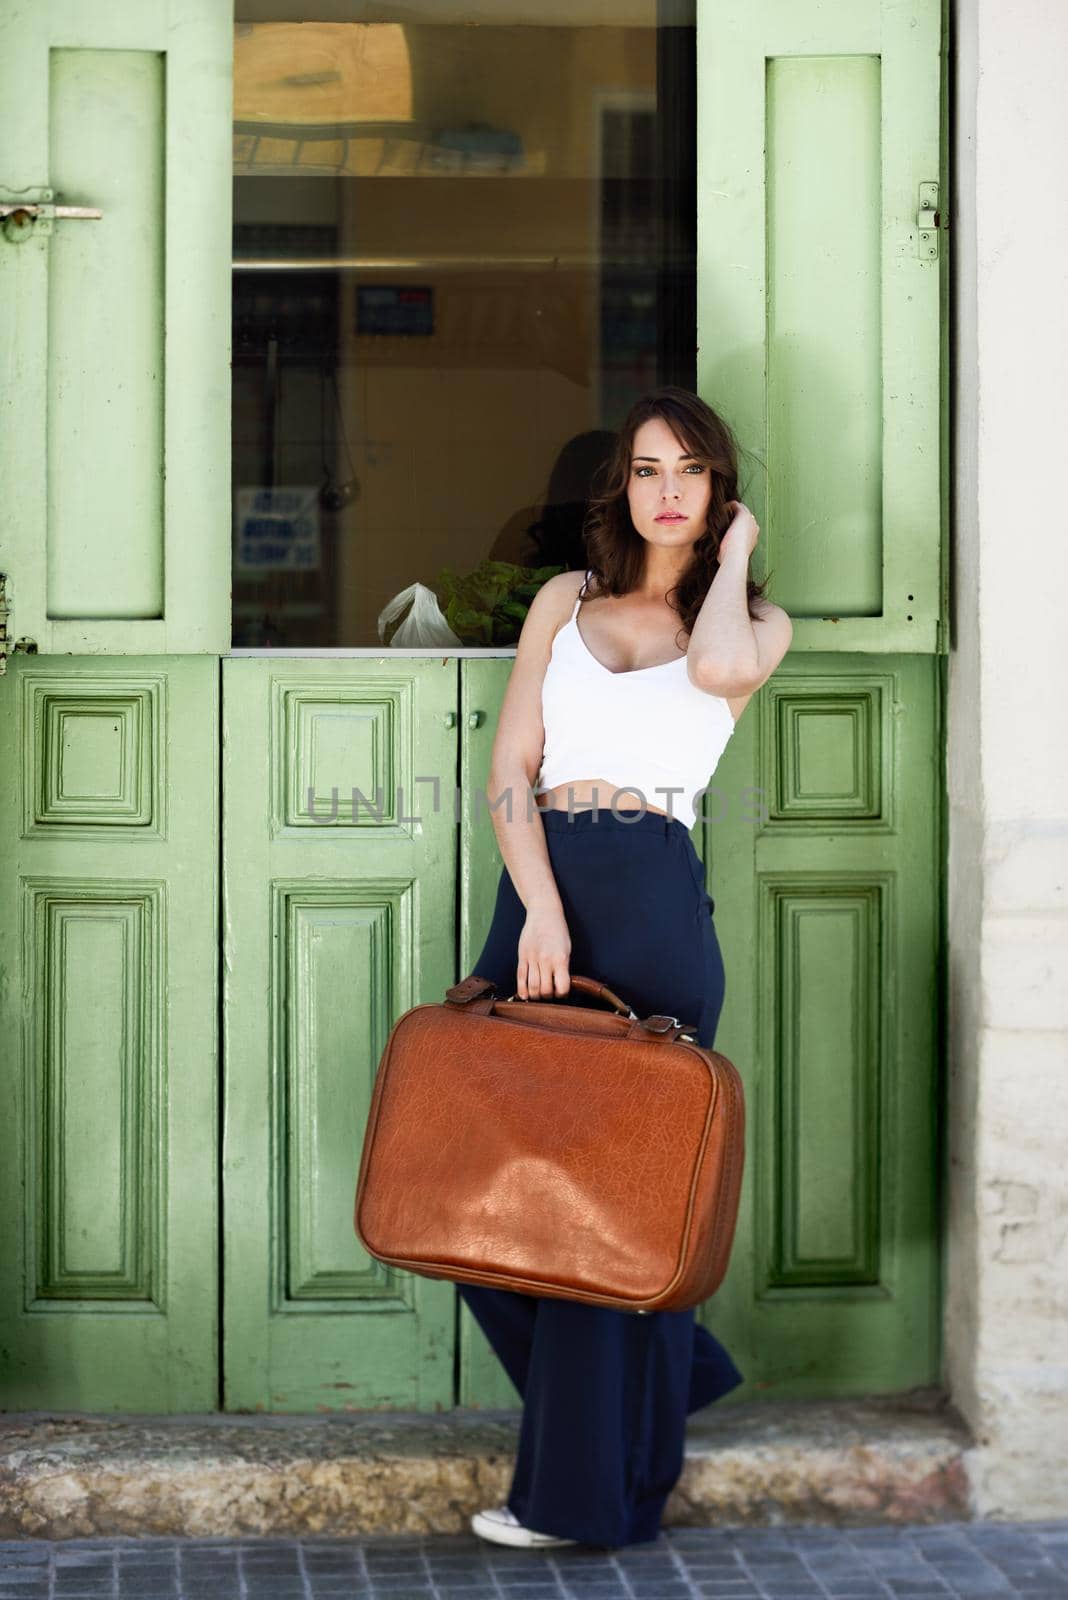 Beautiful girl with vintage bag against green door by javiindy